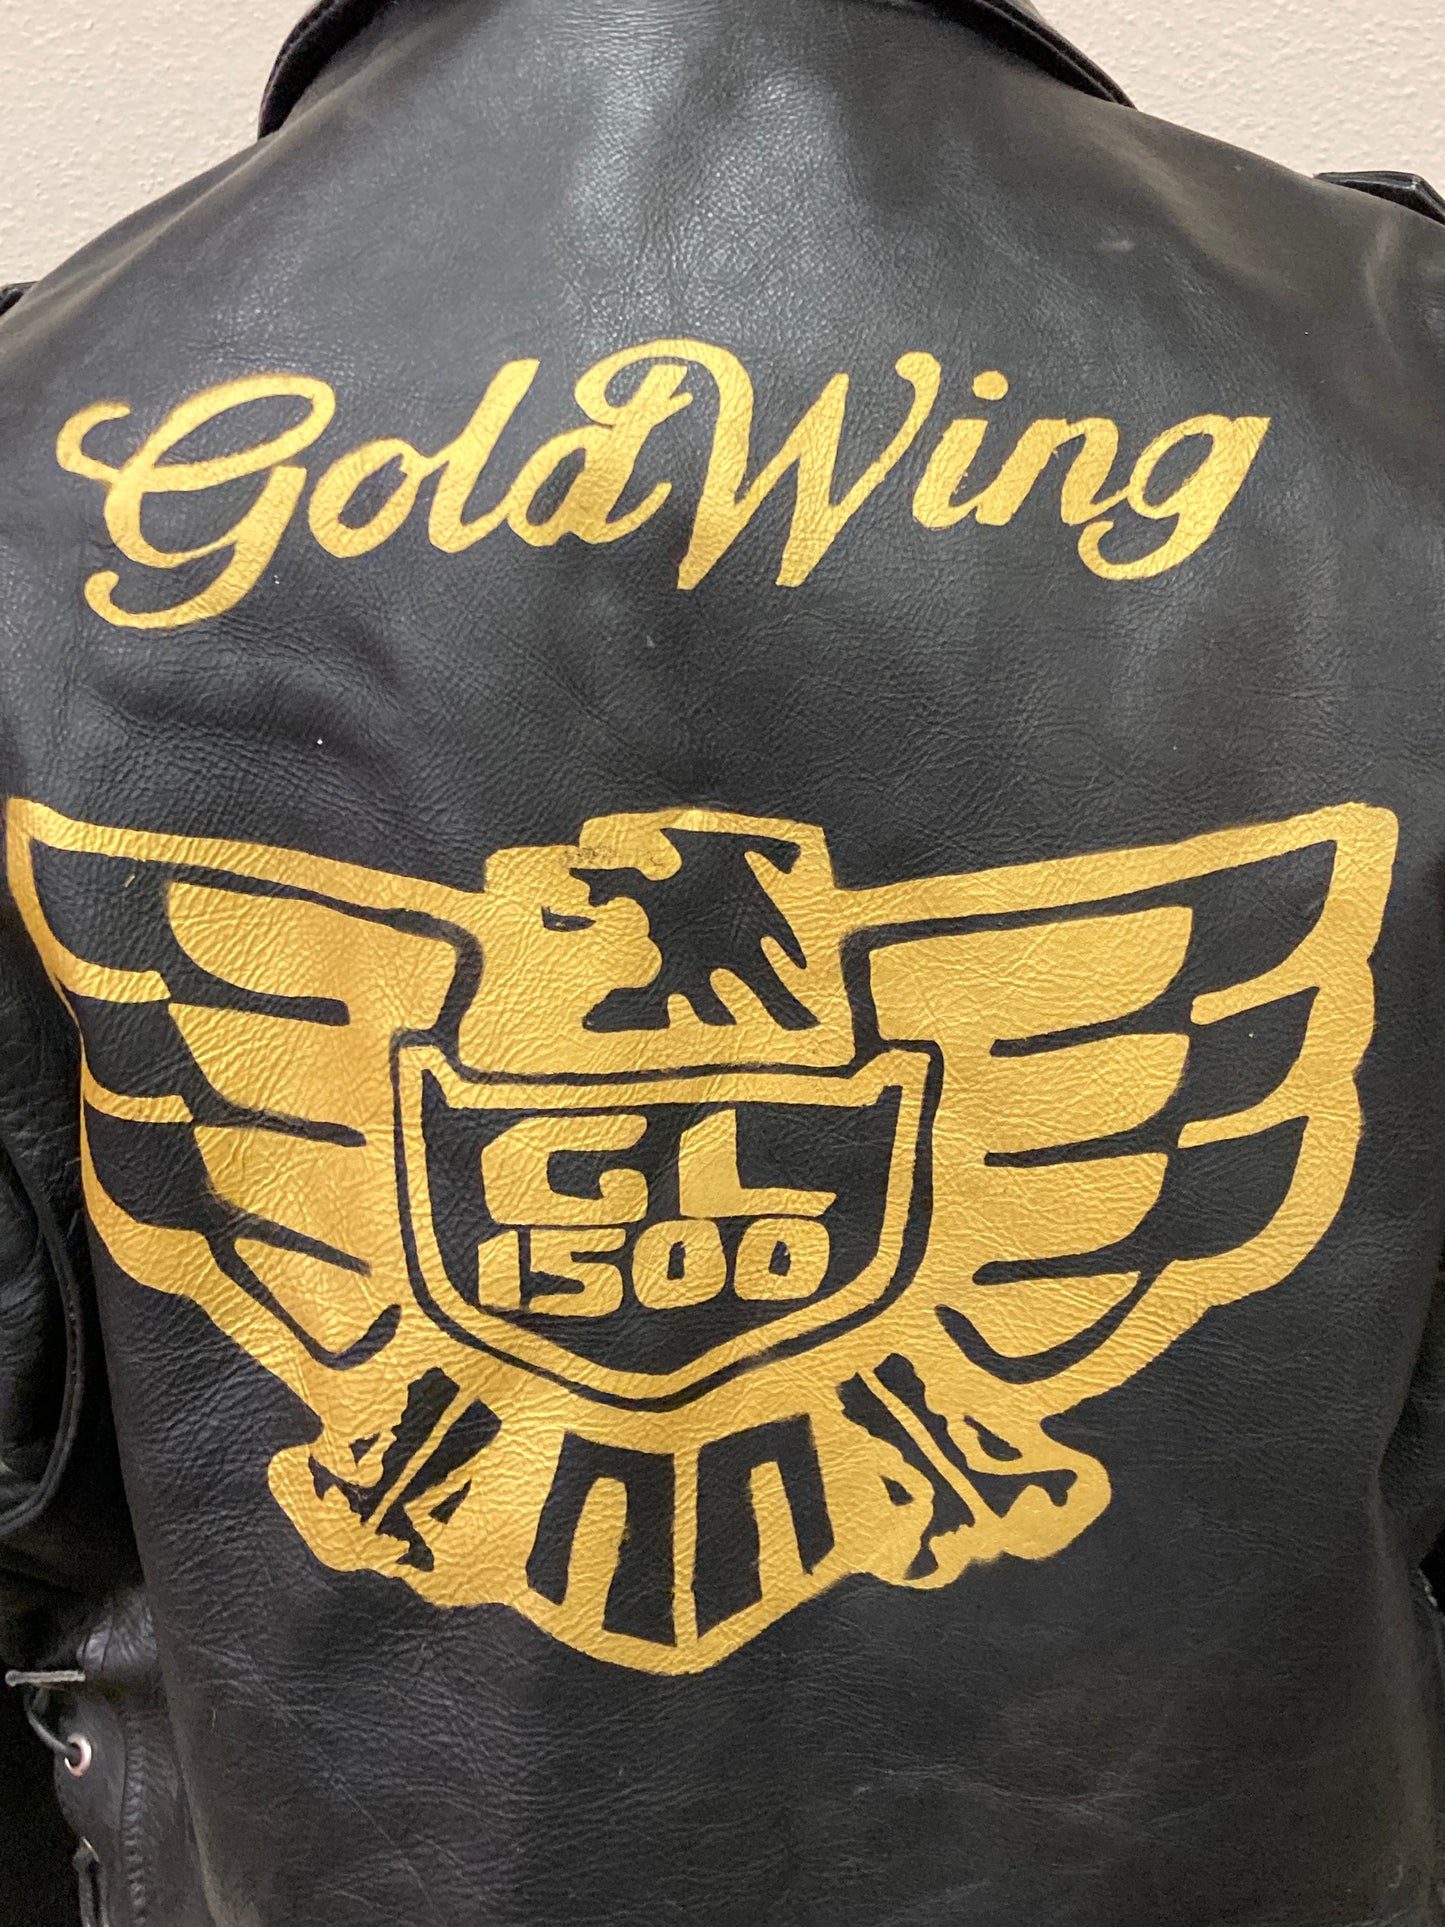 Gold Wing Leather Jacket Men Size 44